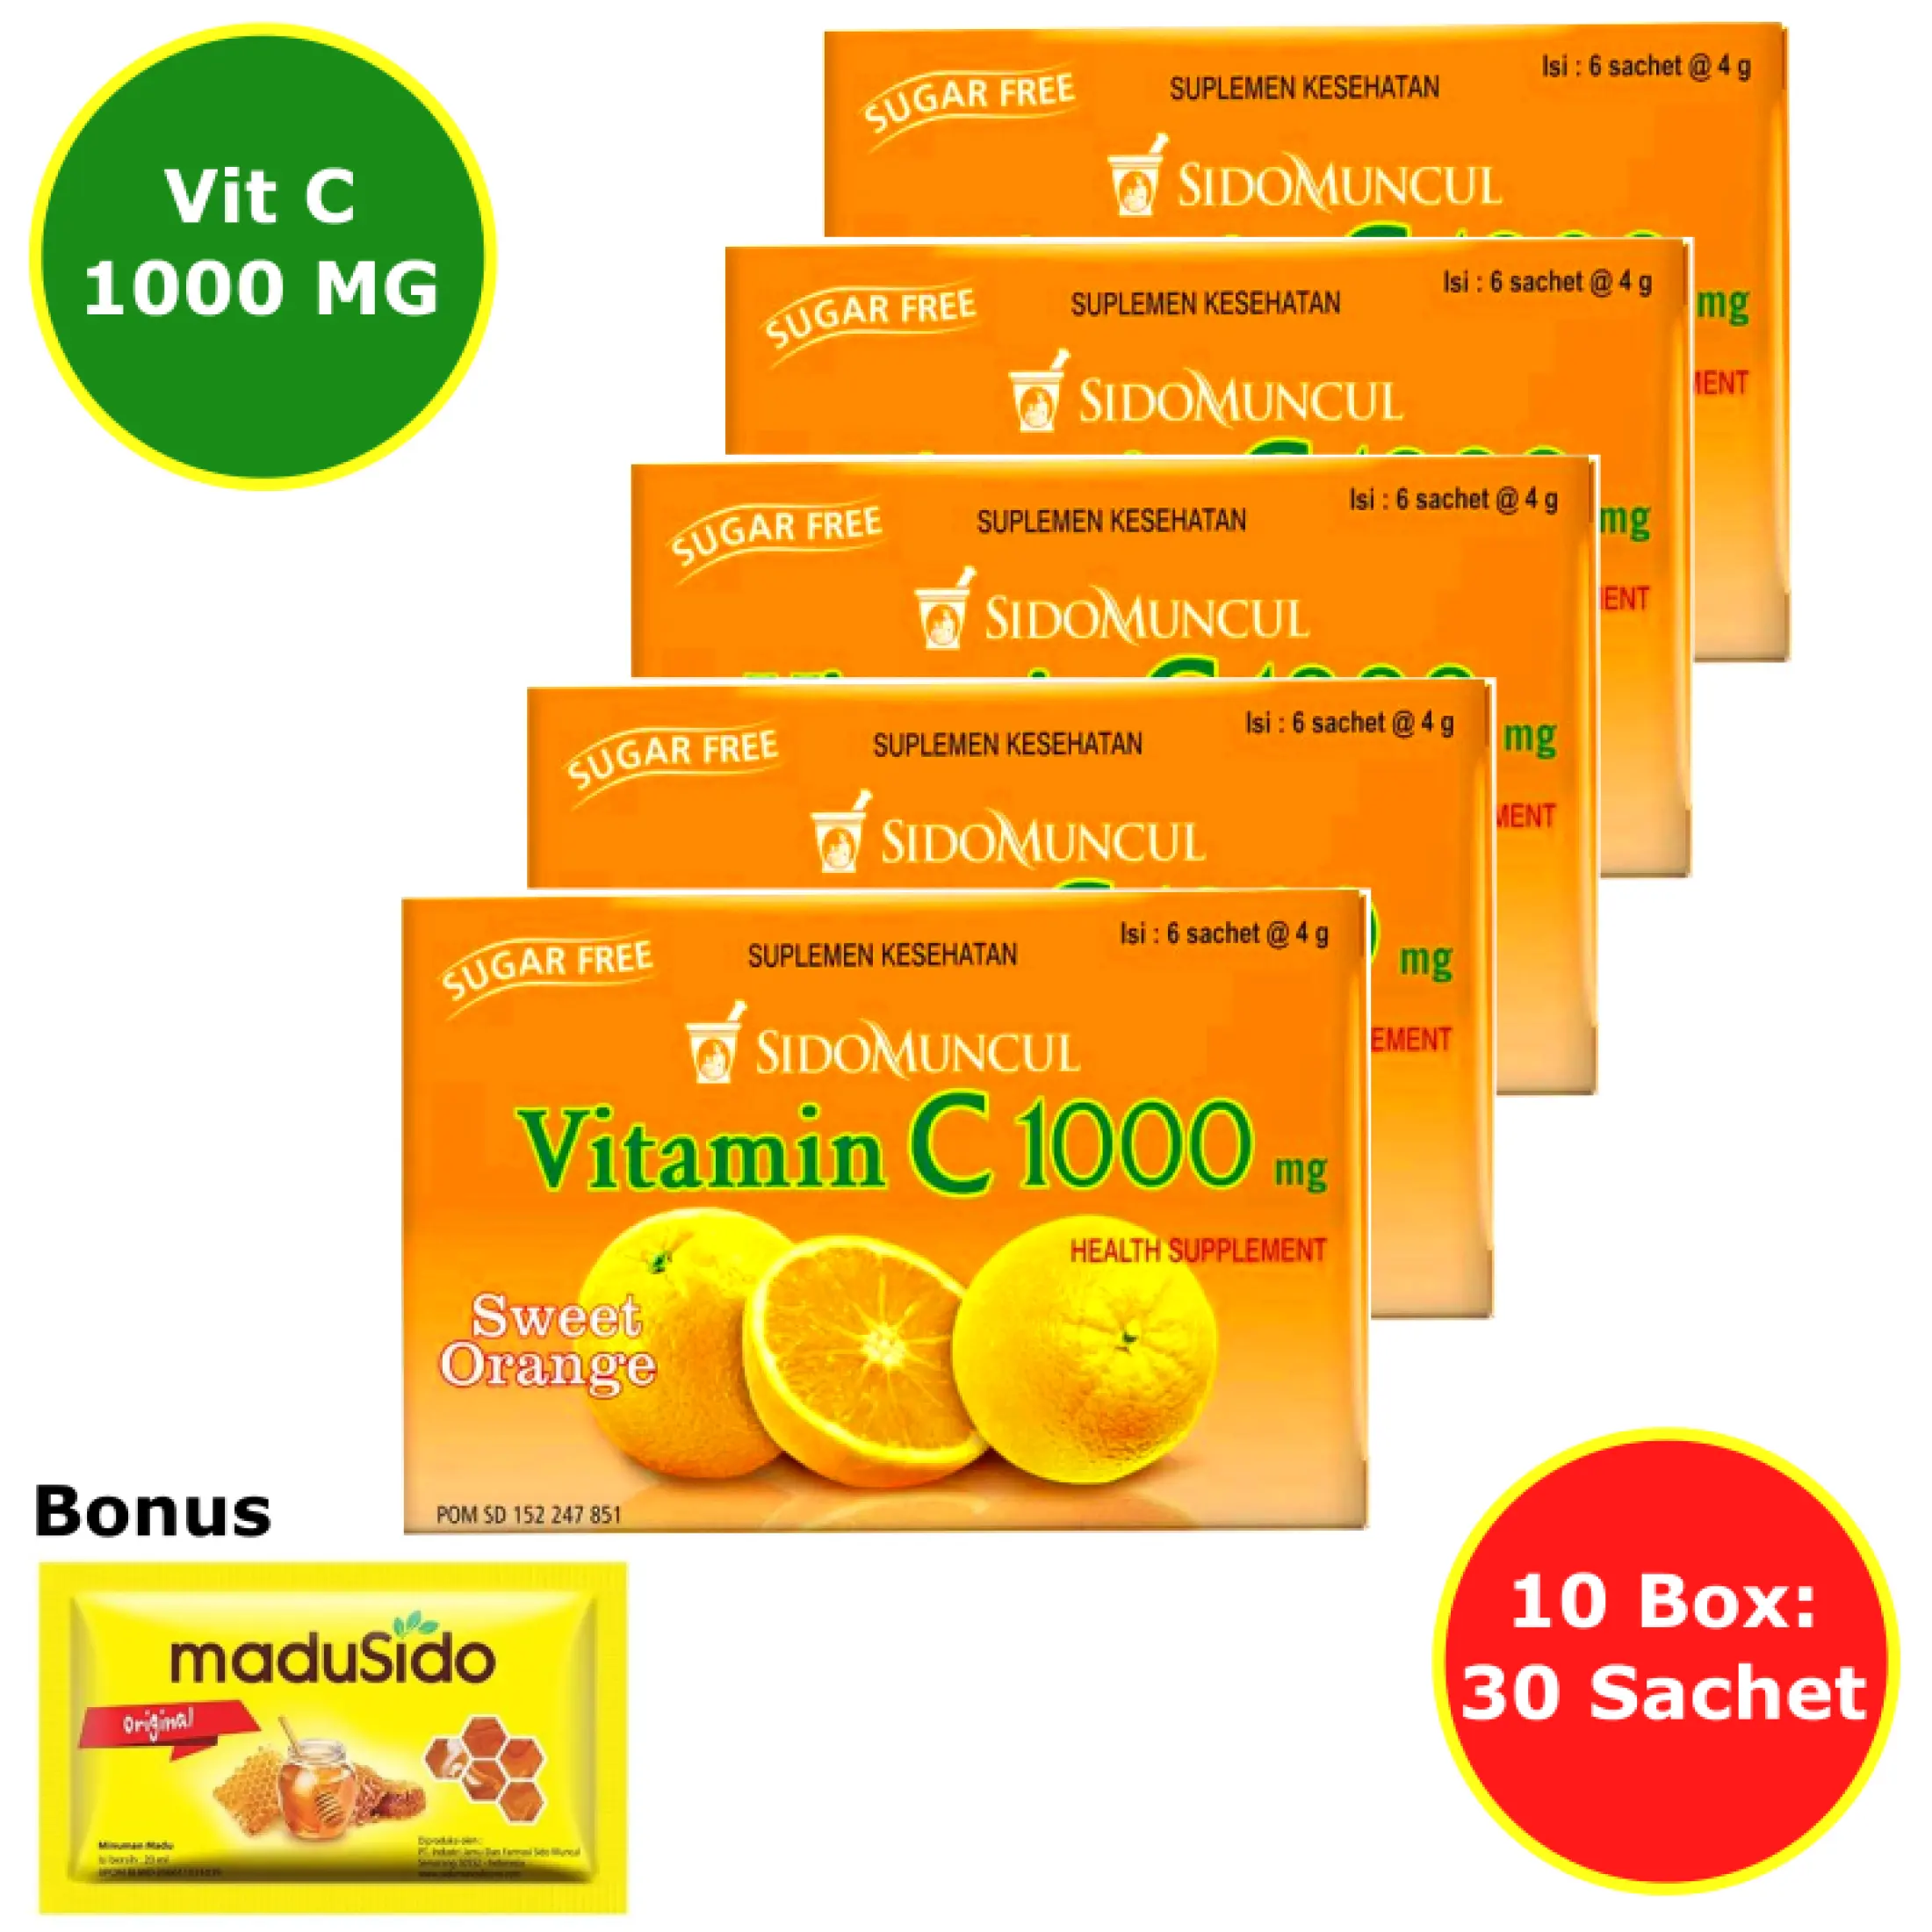 30 Sachet Vitamin C 1000 Mg Sidomuncul Sweet Orange Rasa Jeruk Minuman Vitamin C Suplemen Makanan Untuk Daya Tahan Tubuh Dewasa Anak Imunitas Vit C 1000mg Obat Pitamin Fitamin Sido Muncul Lazada Indonesia